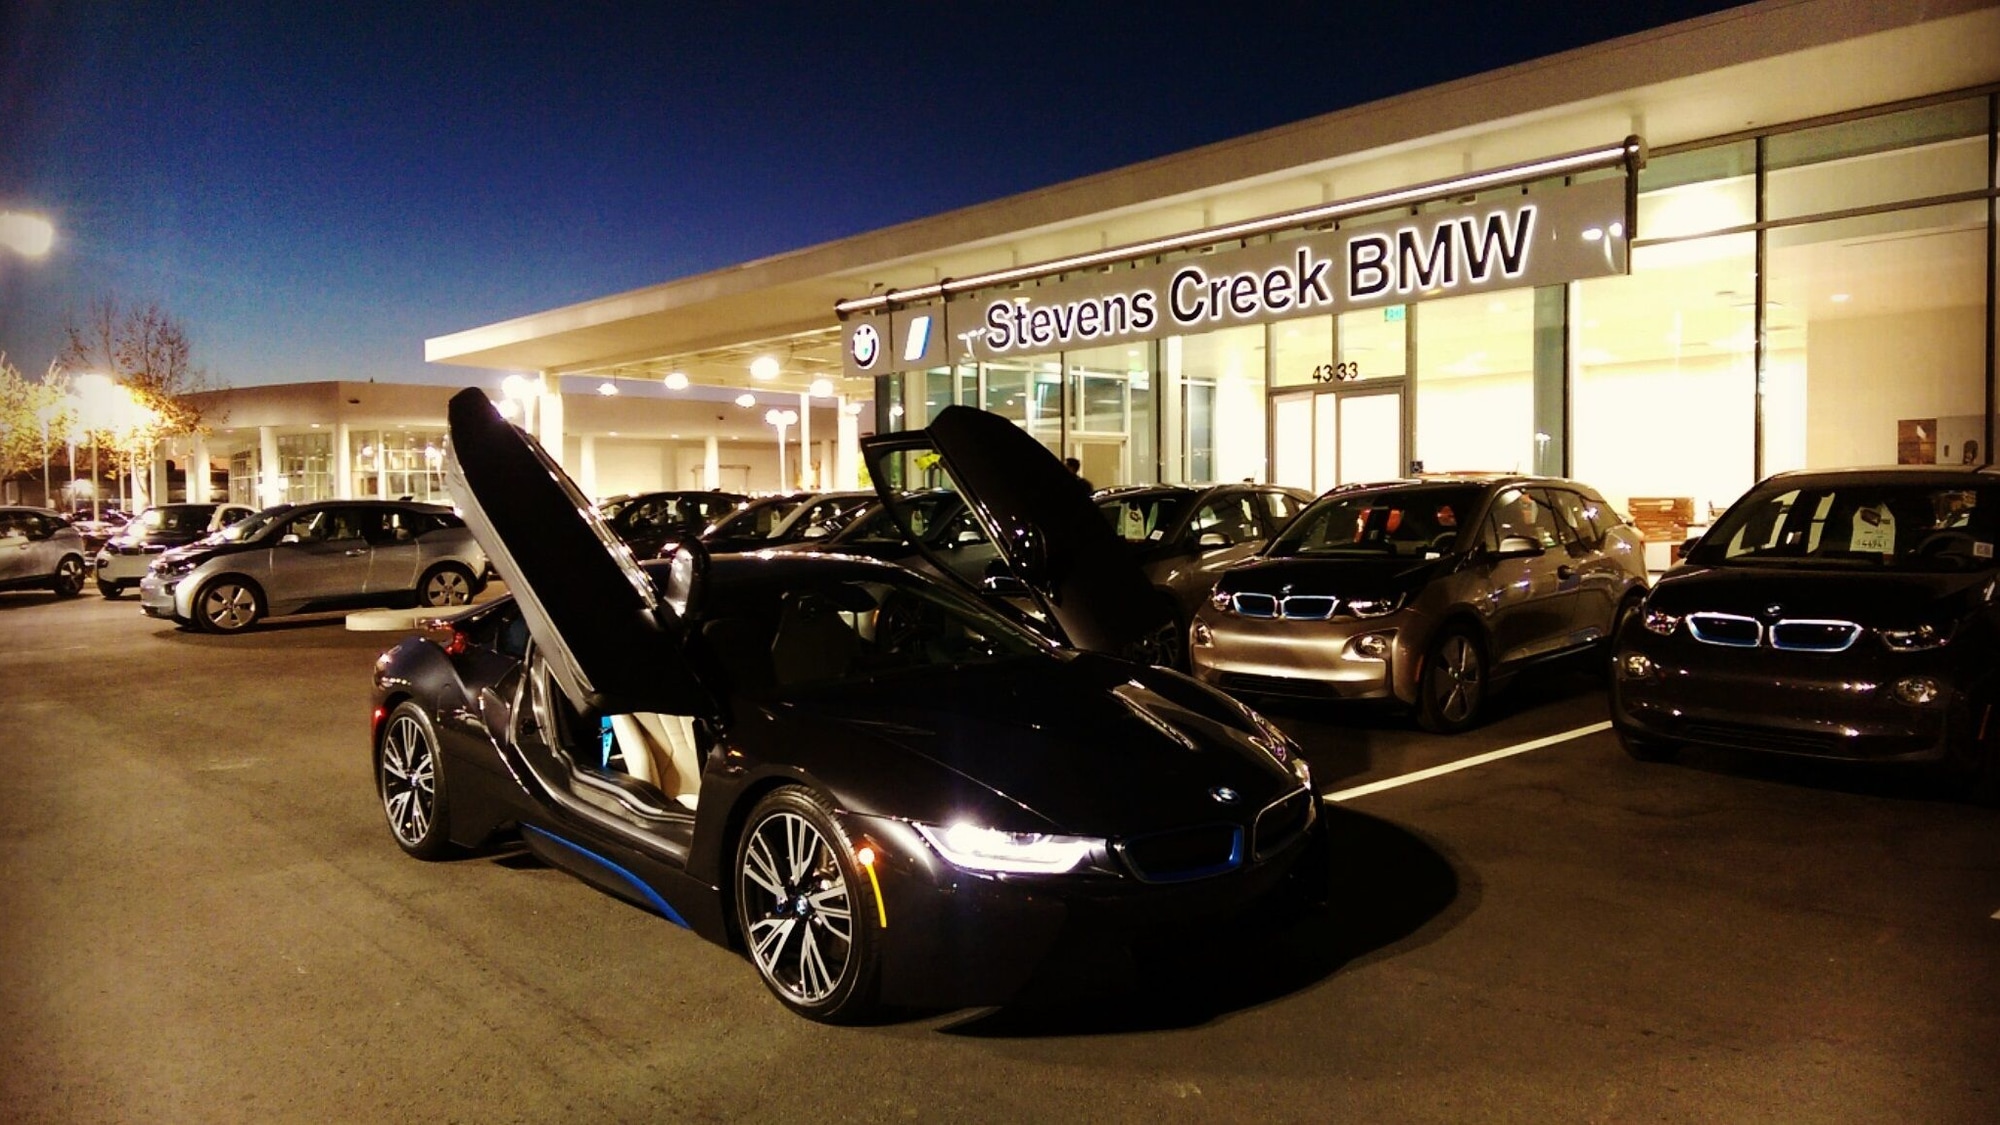 Stevens Creek BMW i Center, Santa Clara, California, May 2015 opening